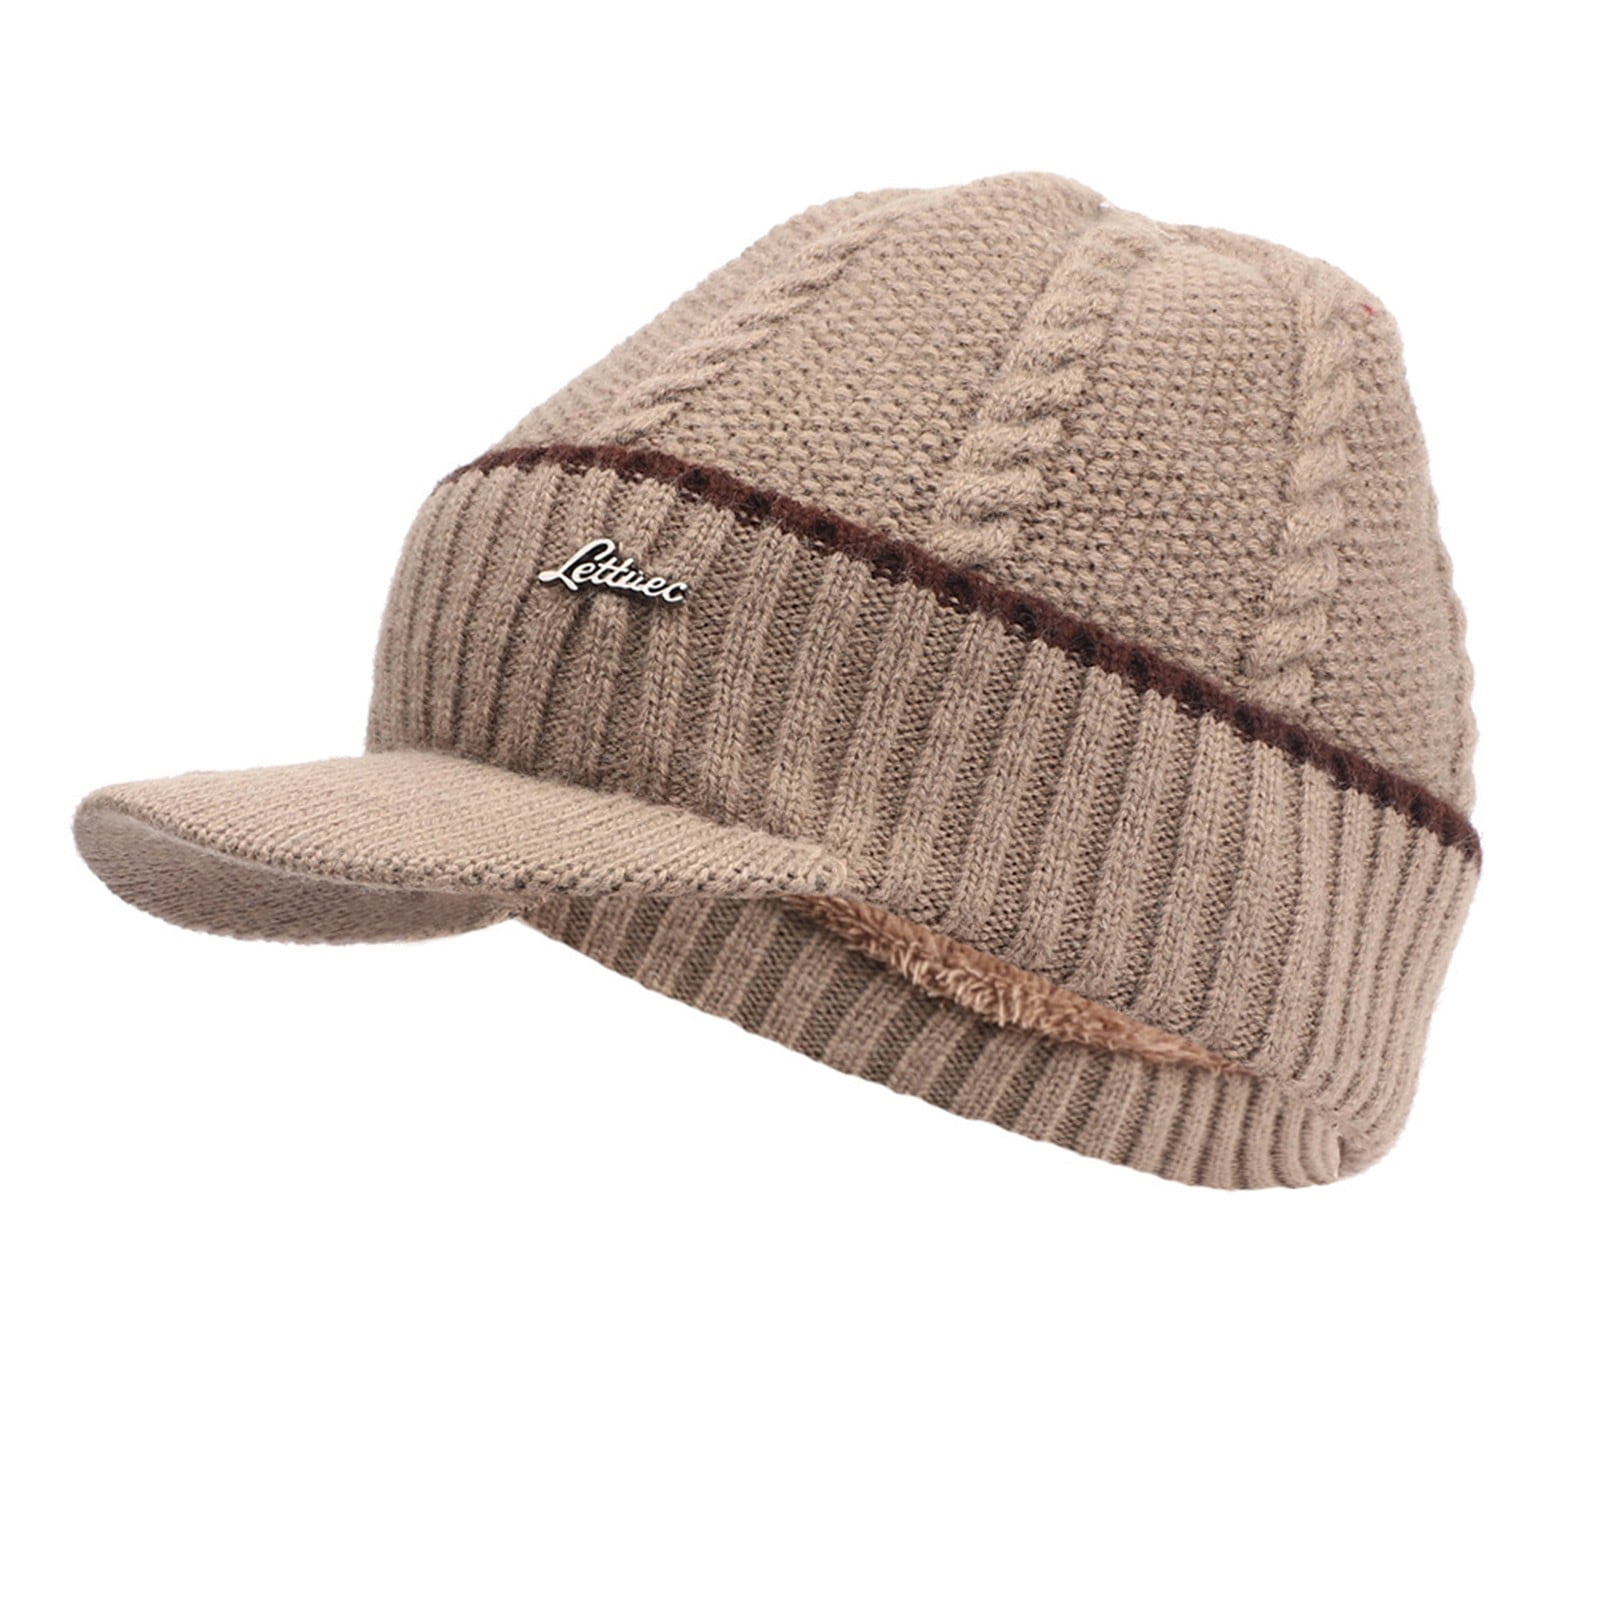 HSMQHJWE Outdoor Cap Brand Hatsnap Back Hats For Men Cap Knit